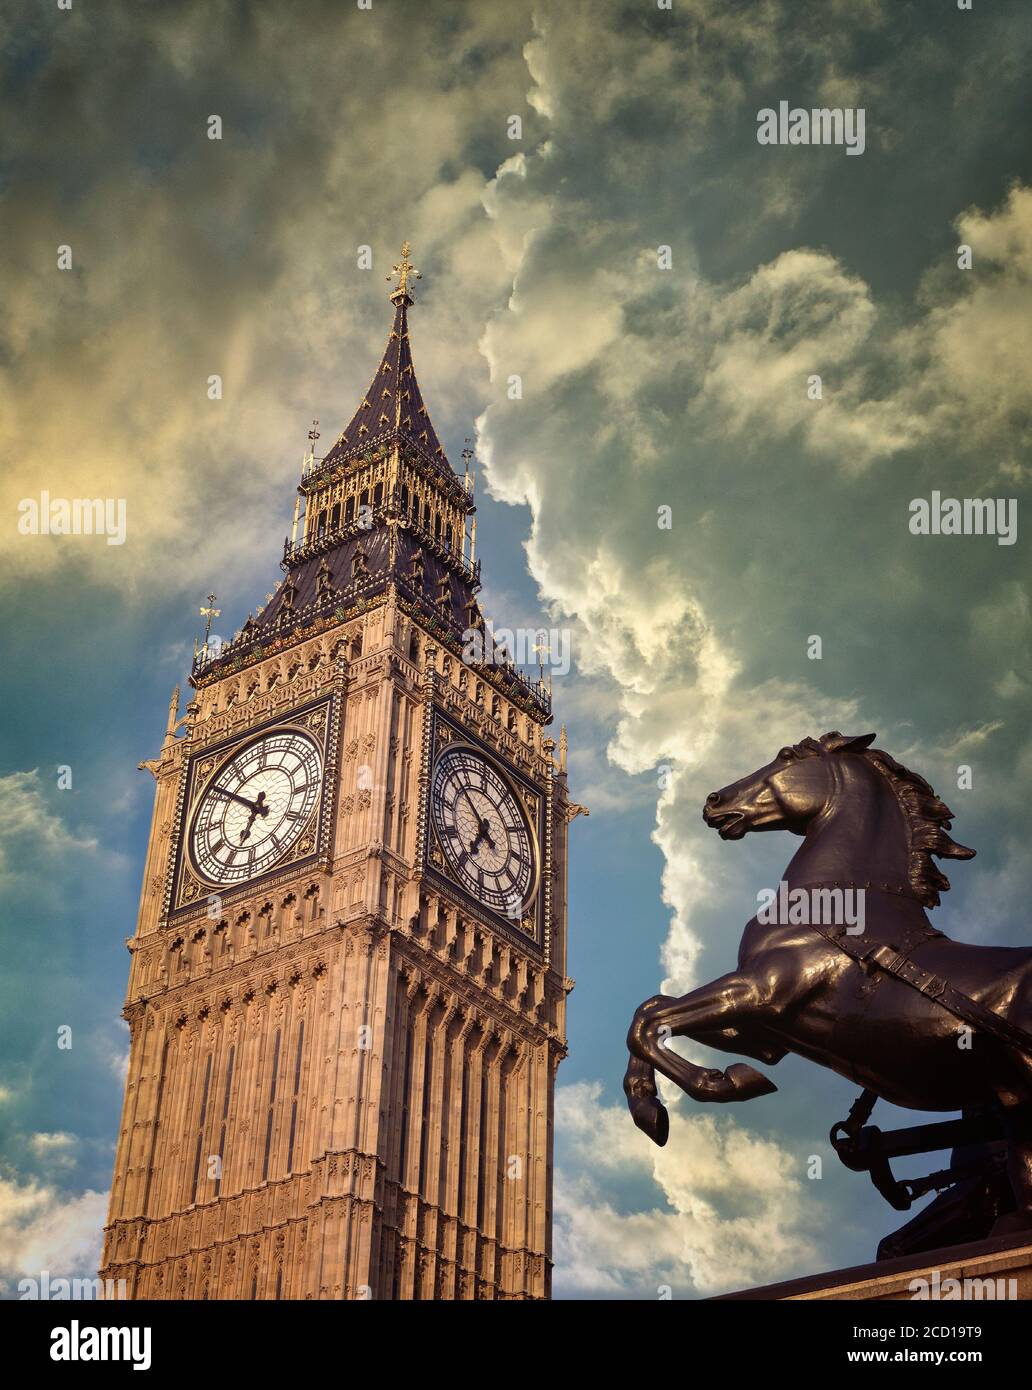 GB - LONDRA: Elizabeth Tower (Big ben) al Parlamento Foto Stock